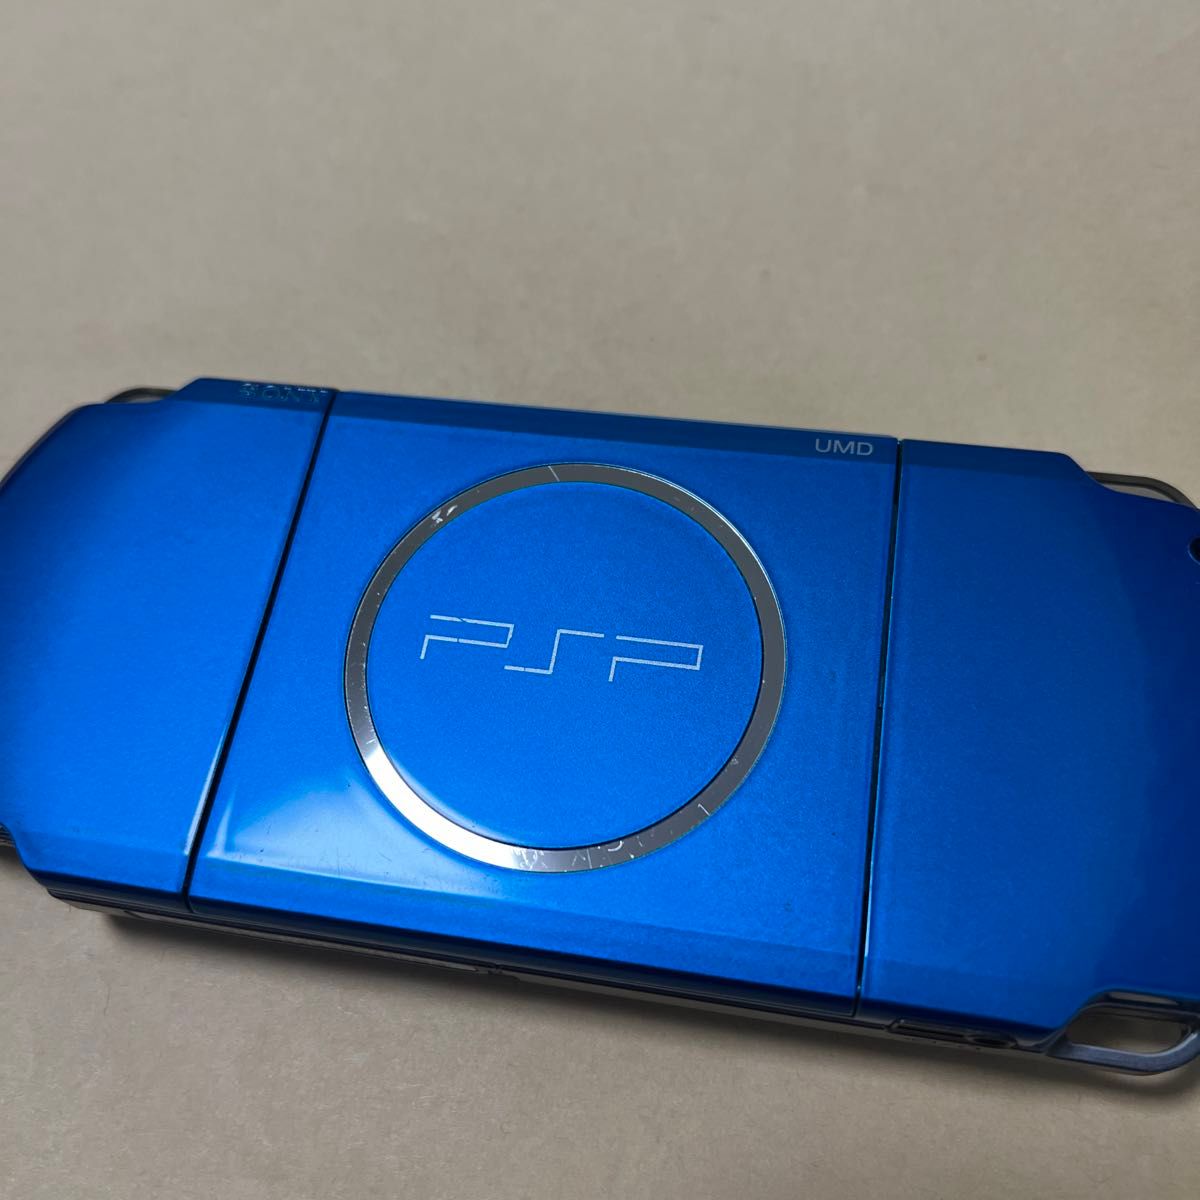 PSP3000 ジャンク品